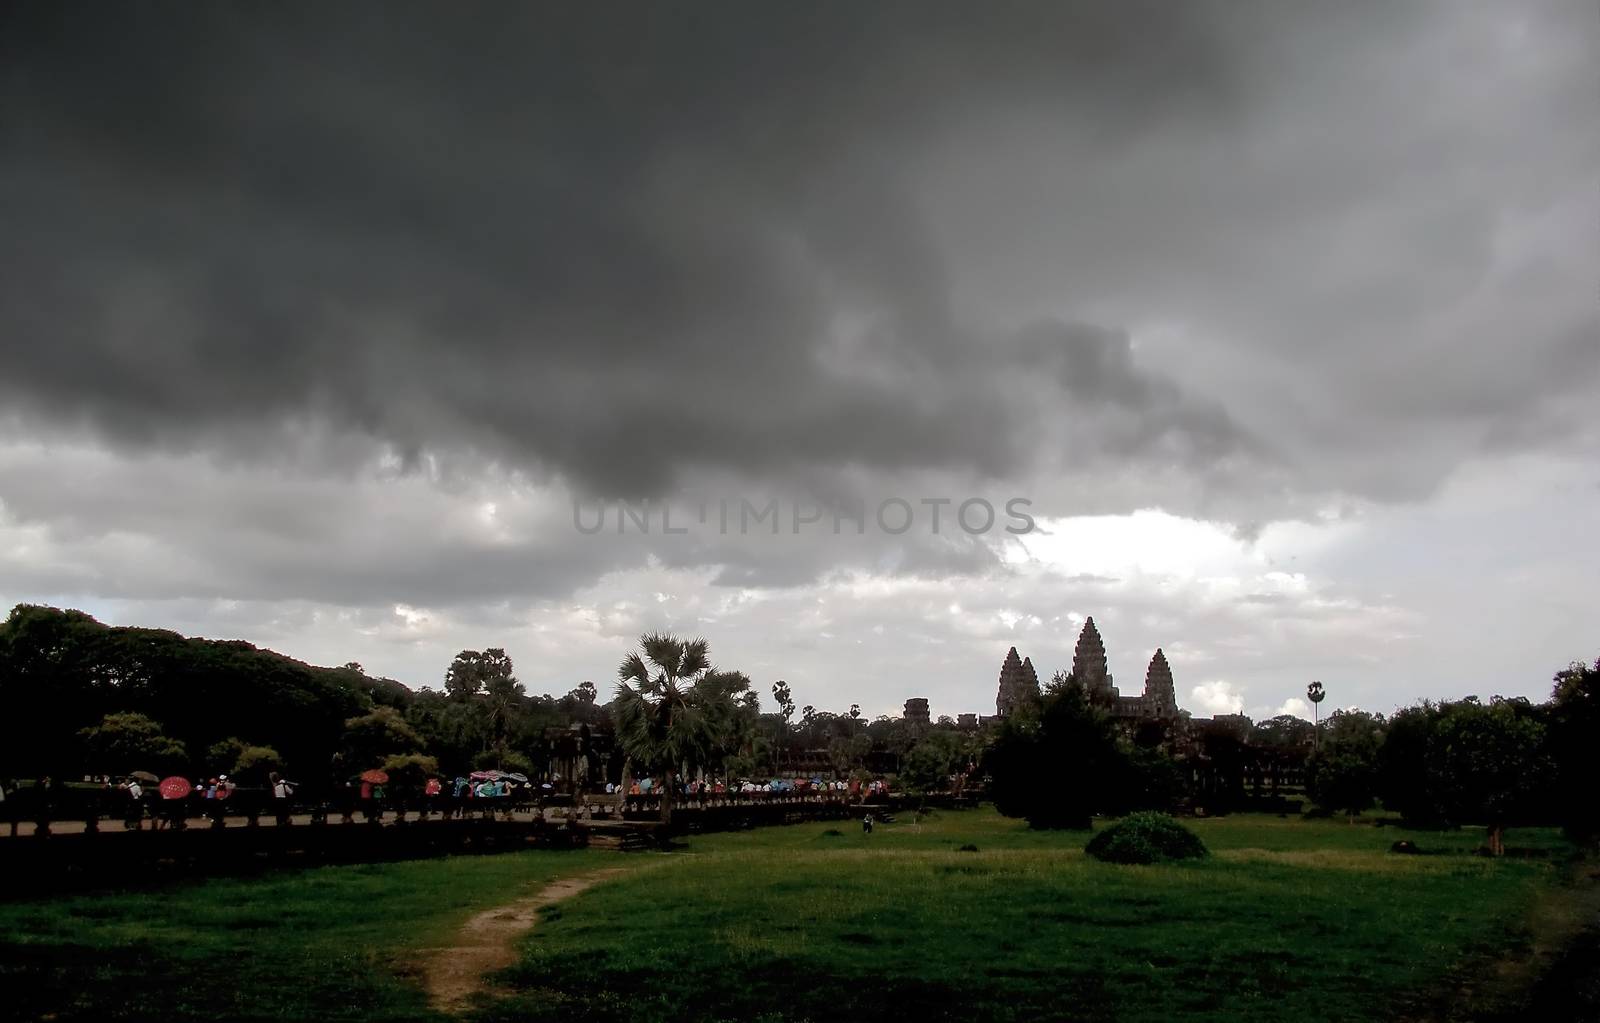 Rain cloud move towards an ancient temple, Angkor Wat, in Siem Reap, Cambodia.